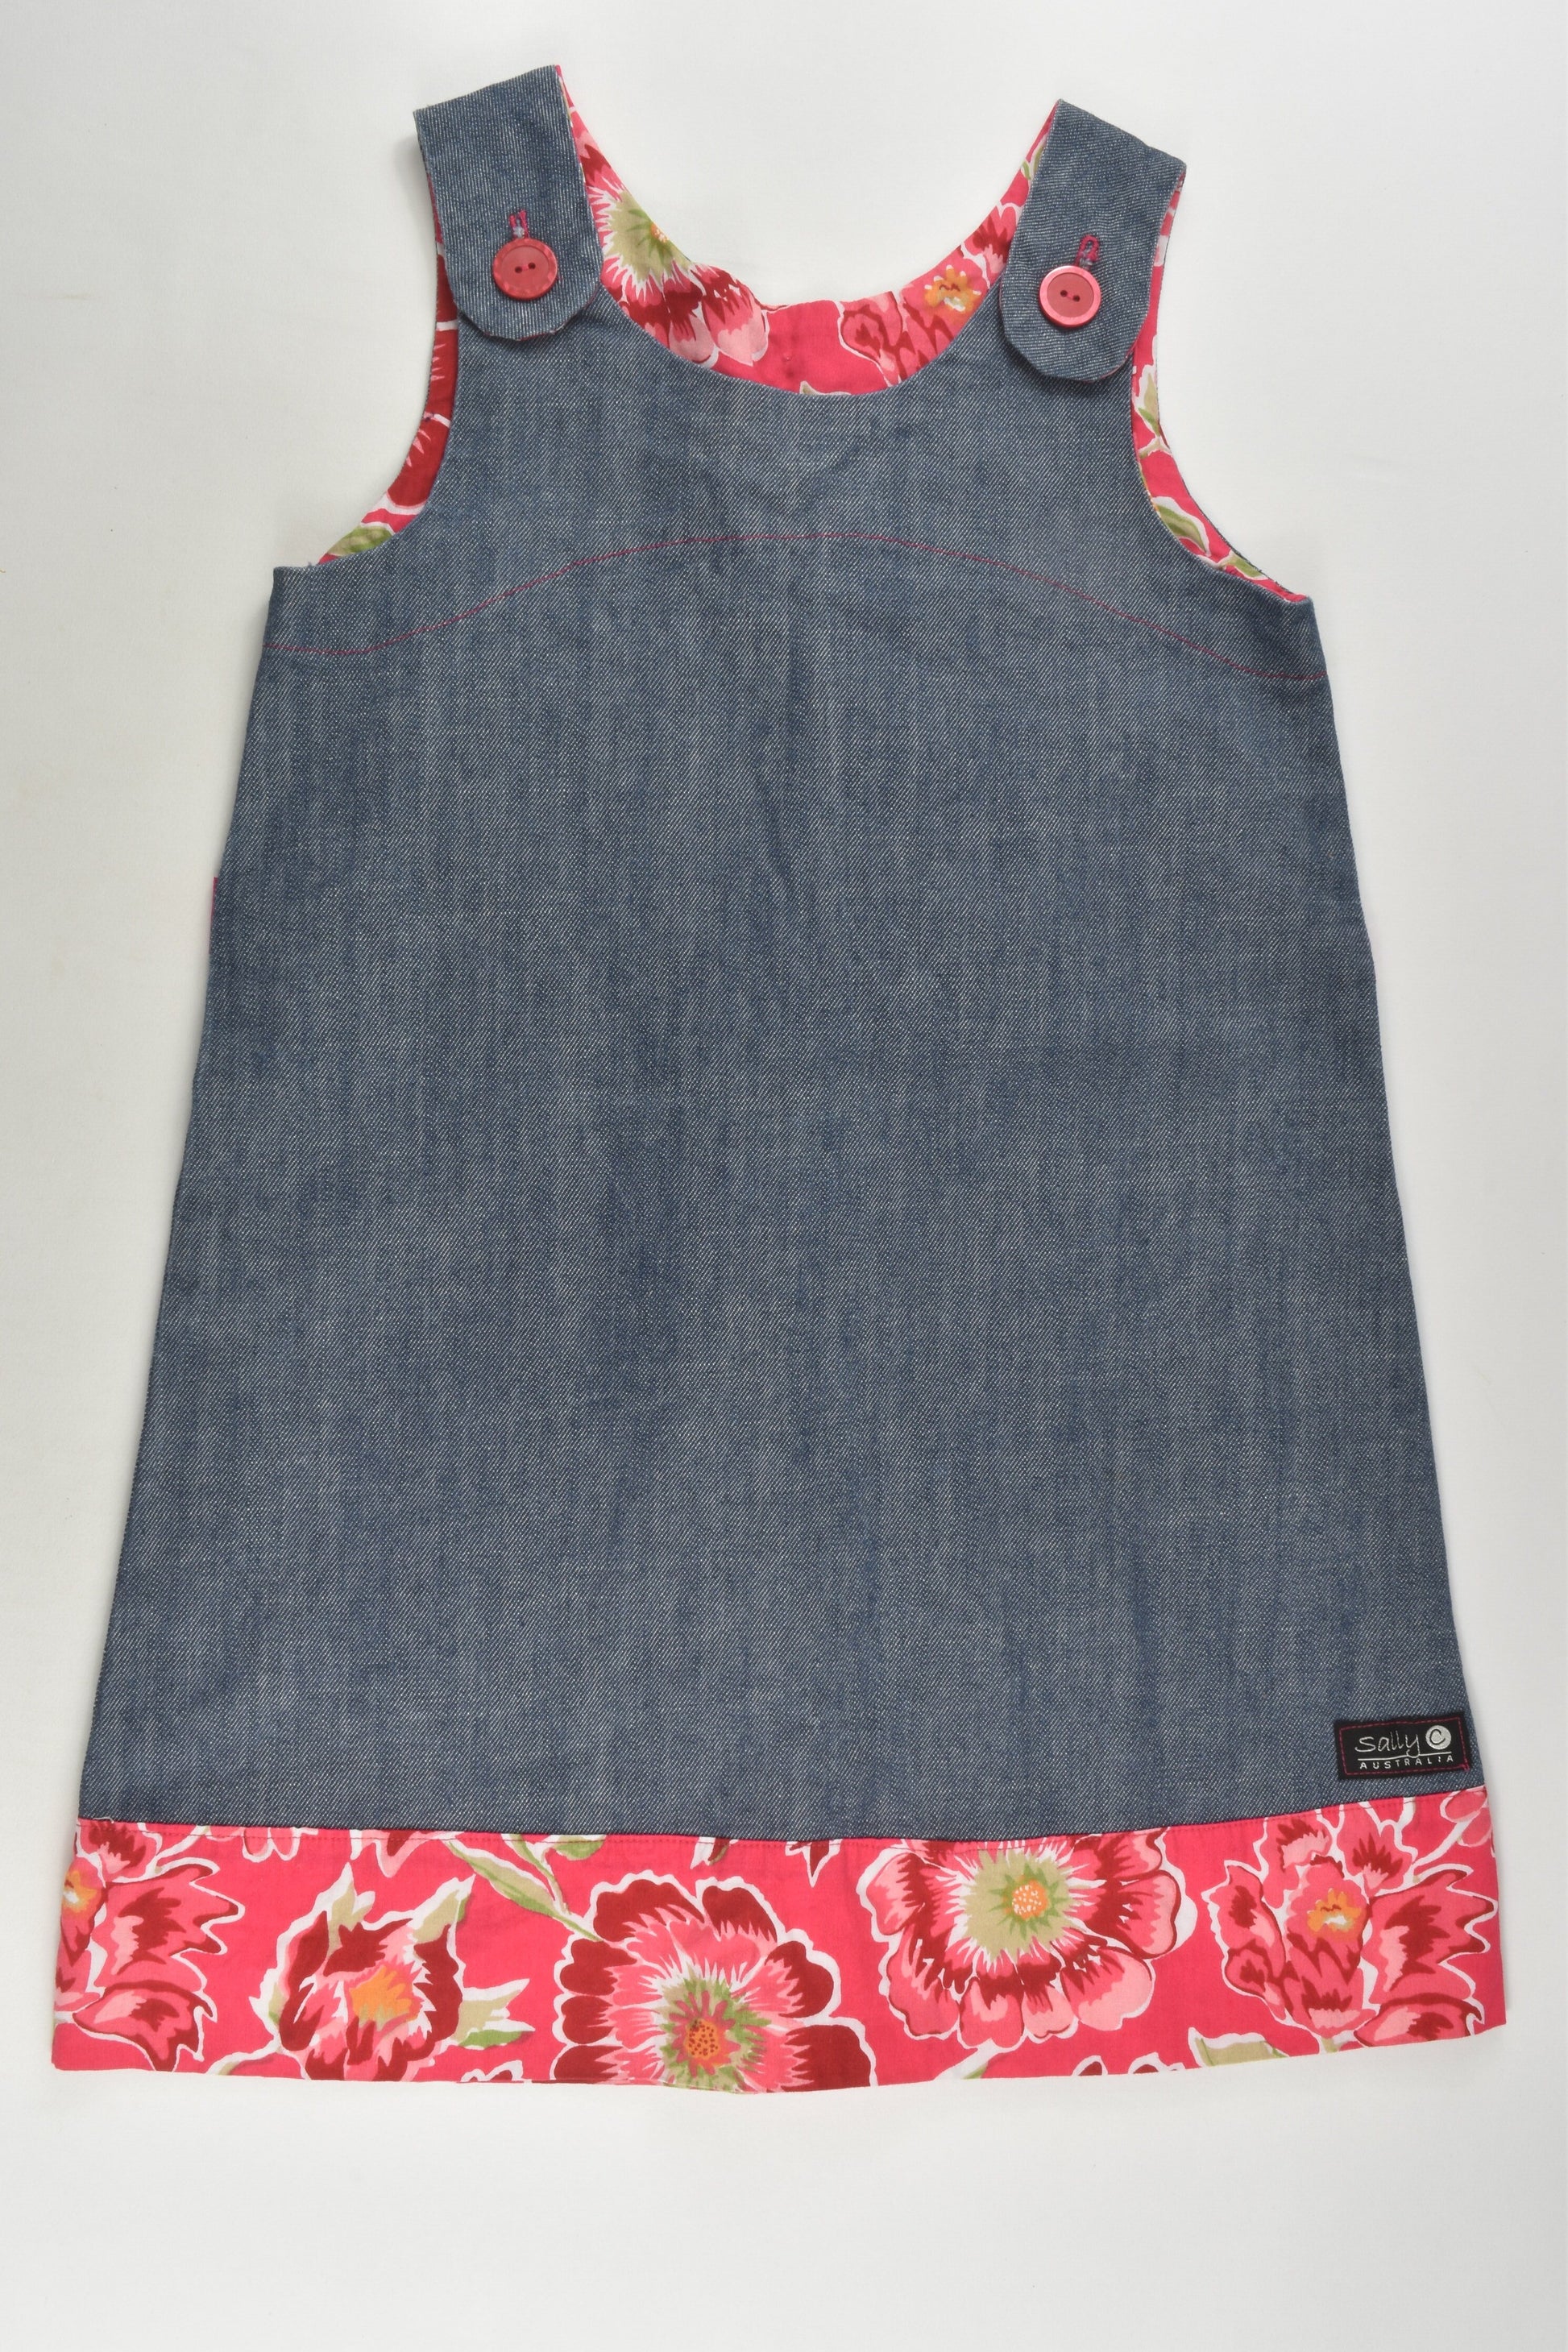 Sally Australia Size 5-6 Handmade Denim Dress